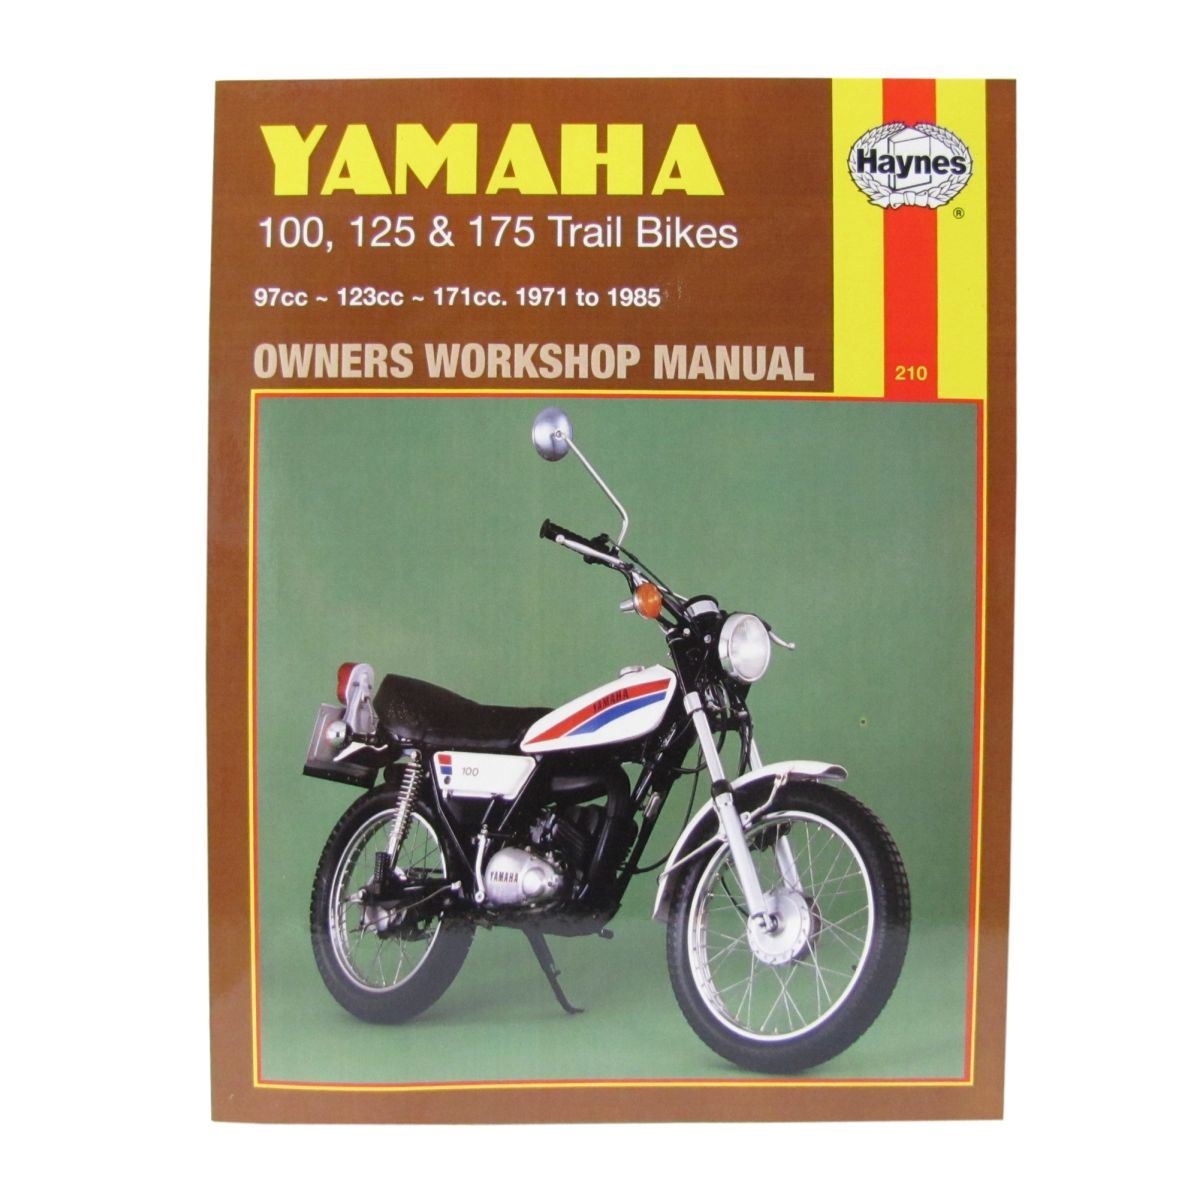 YAMAHA GENUINE PARTS MANUAL 1981 1982 1983 DT100 DT 100 